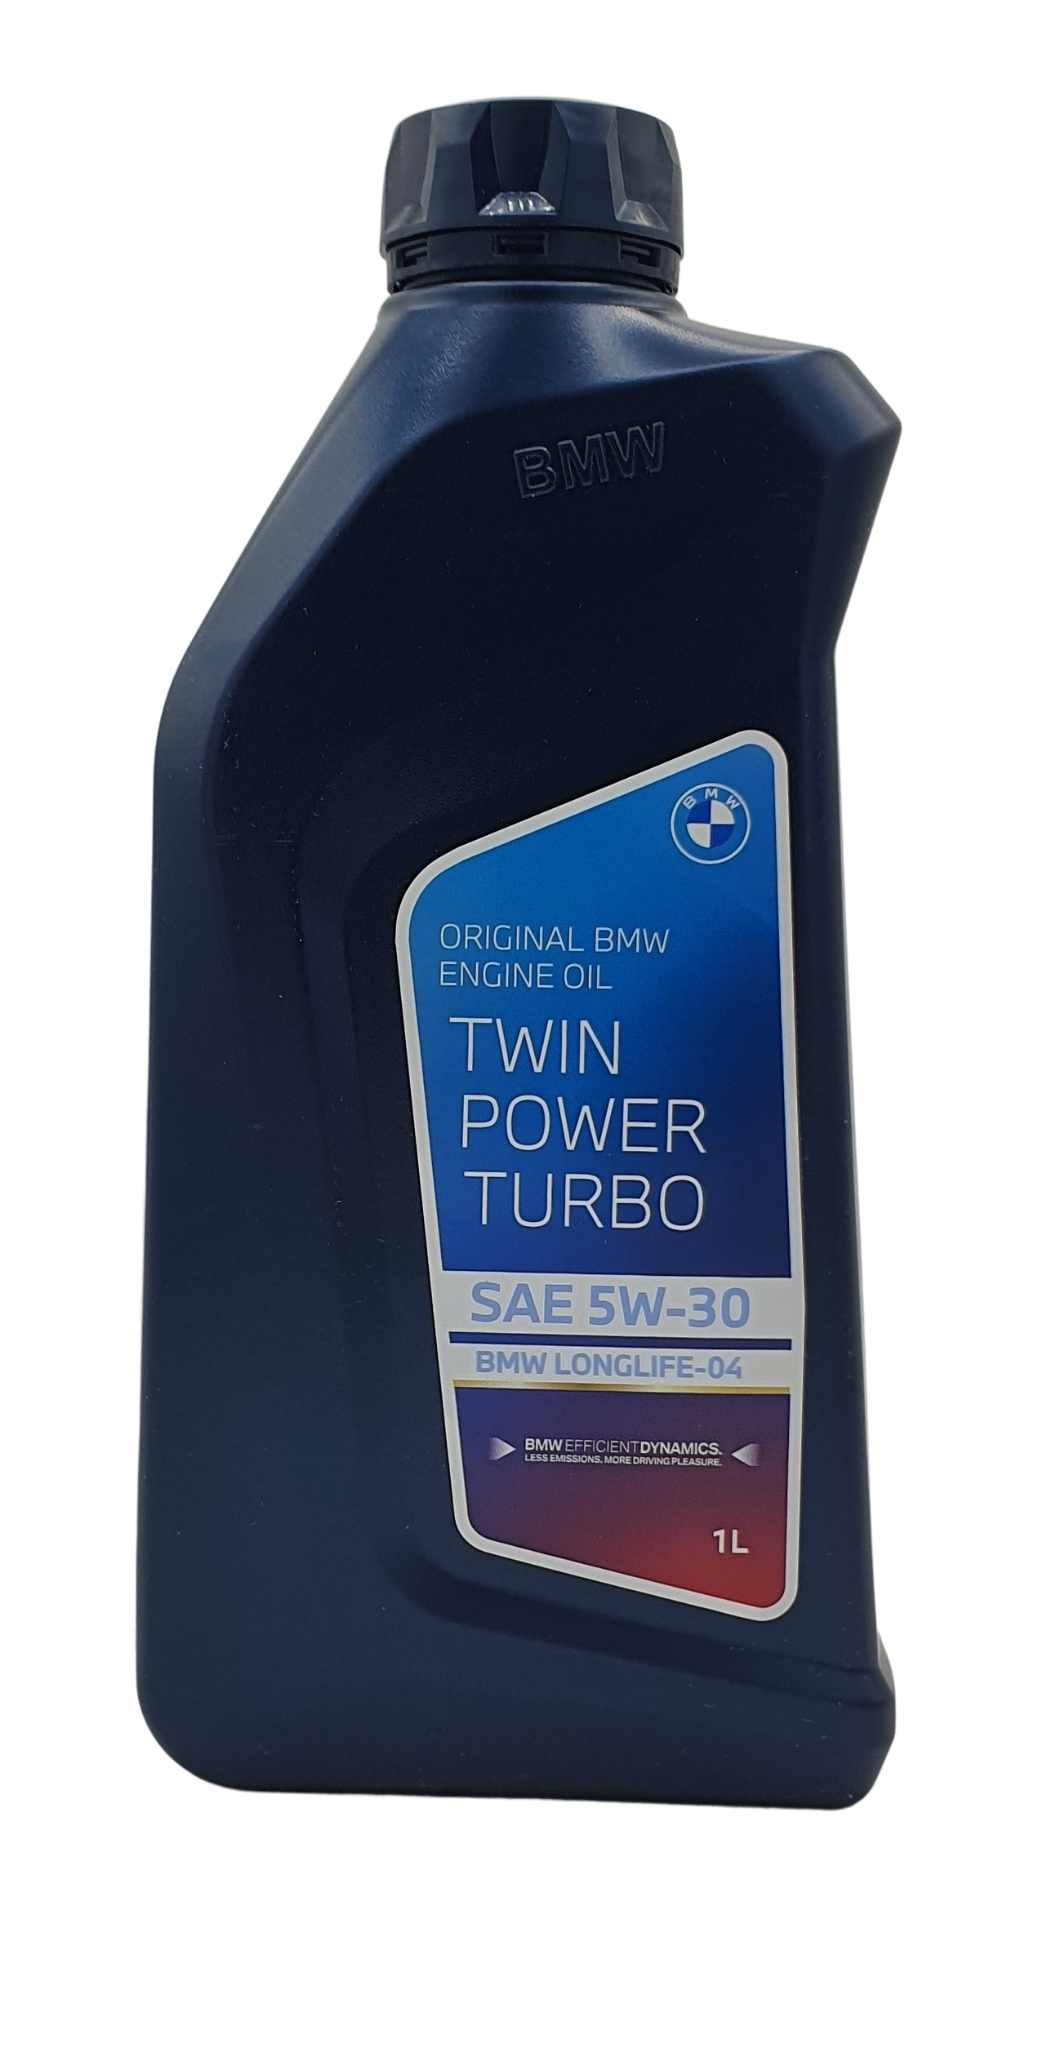 BMW TwinPower Turbo LL-04 5W-30 1 Liter